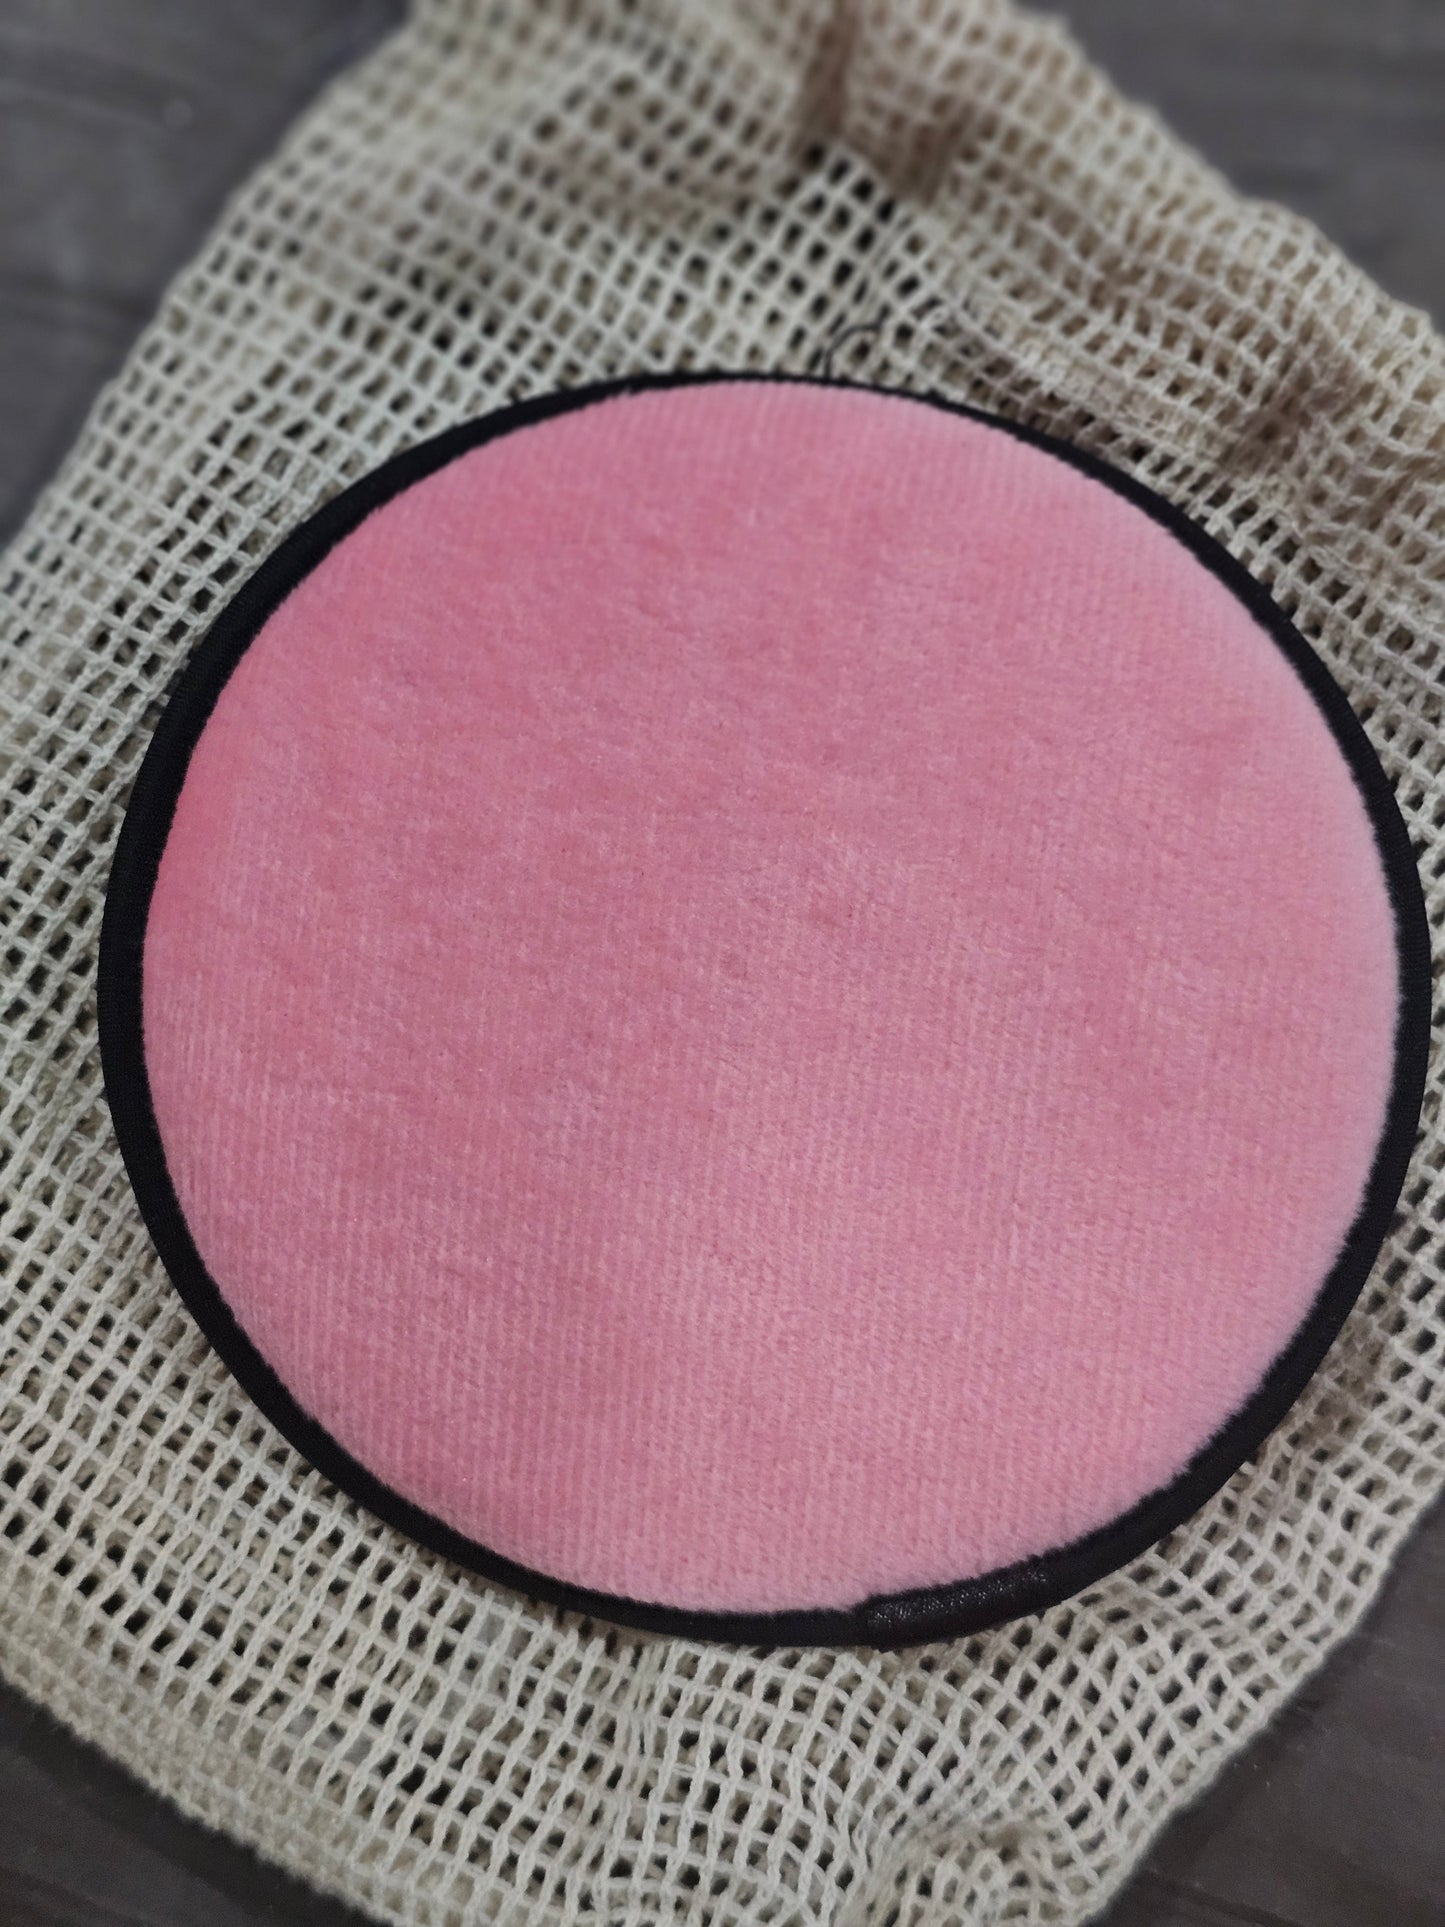 Powcloud- Resuable Makeup Removing Pads (2) Pack